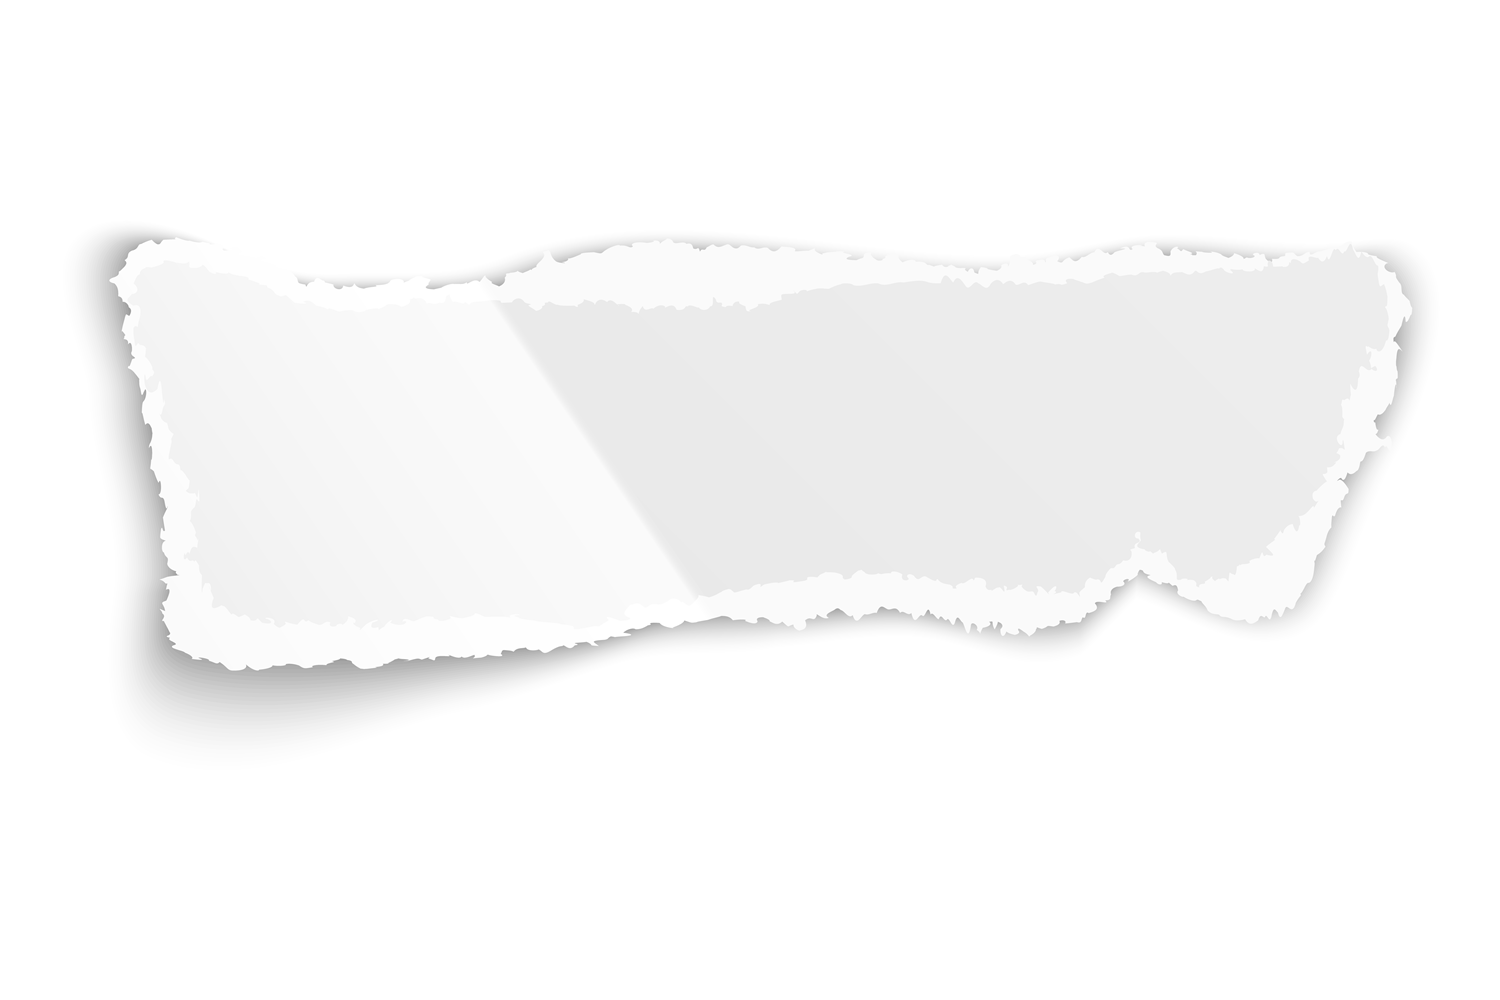 Torn Paper Scrap. Ripped Realistic White Graphic by microvectorone ·  Creative Fabrica